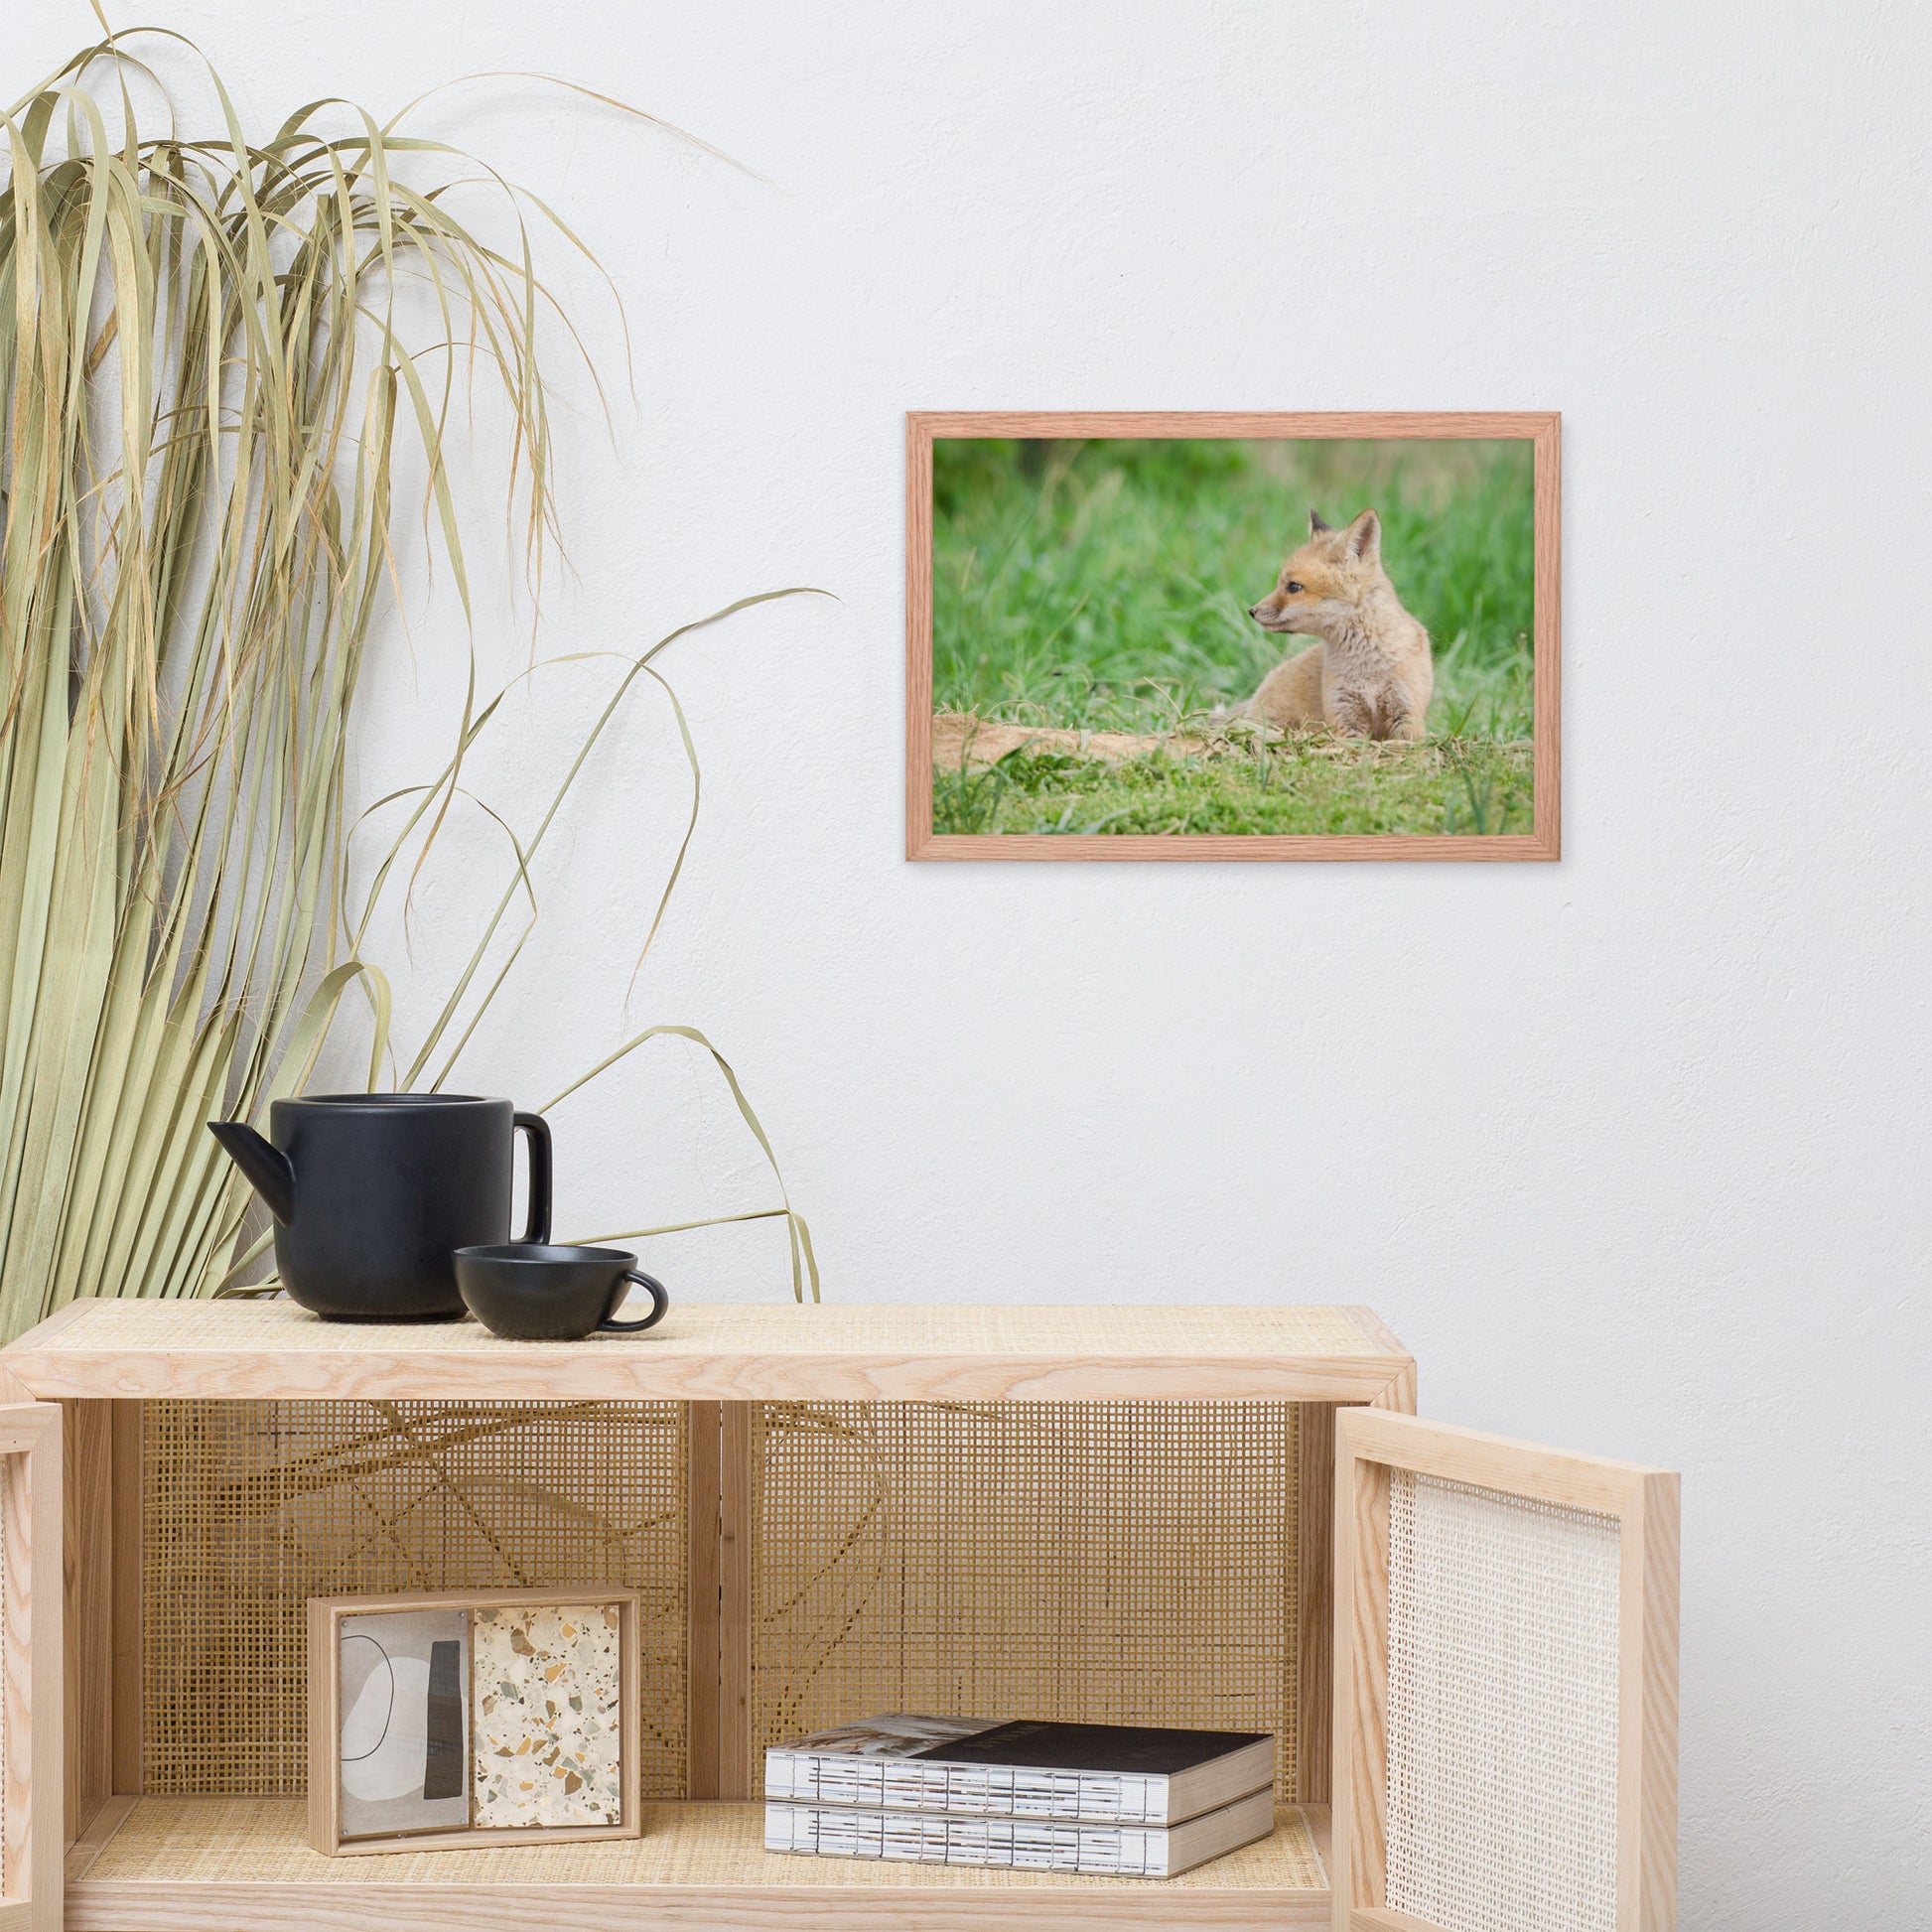 Best Art For Bedroom: Red Fox Pups - Chilling/ Animal / Wildlife / Nature Photographic Artwork - Framed Artwork - Wall Decor